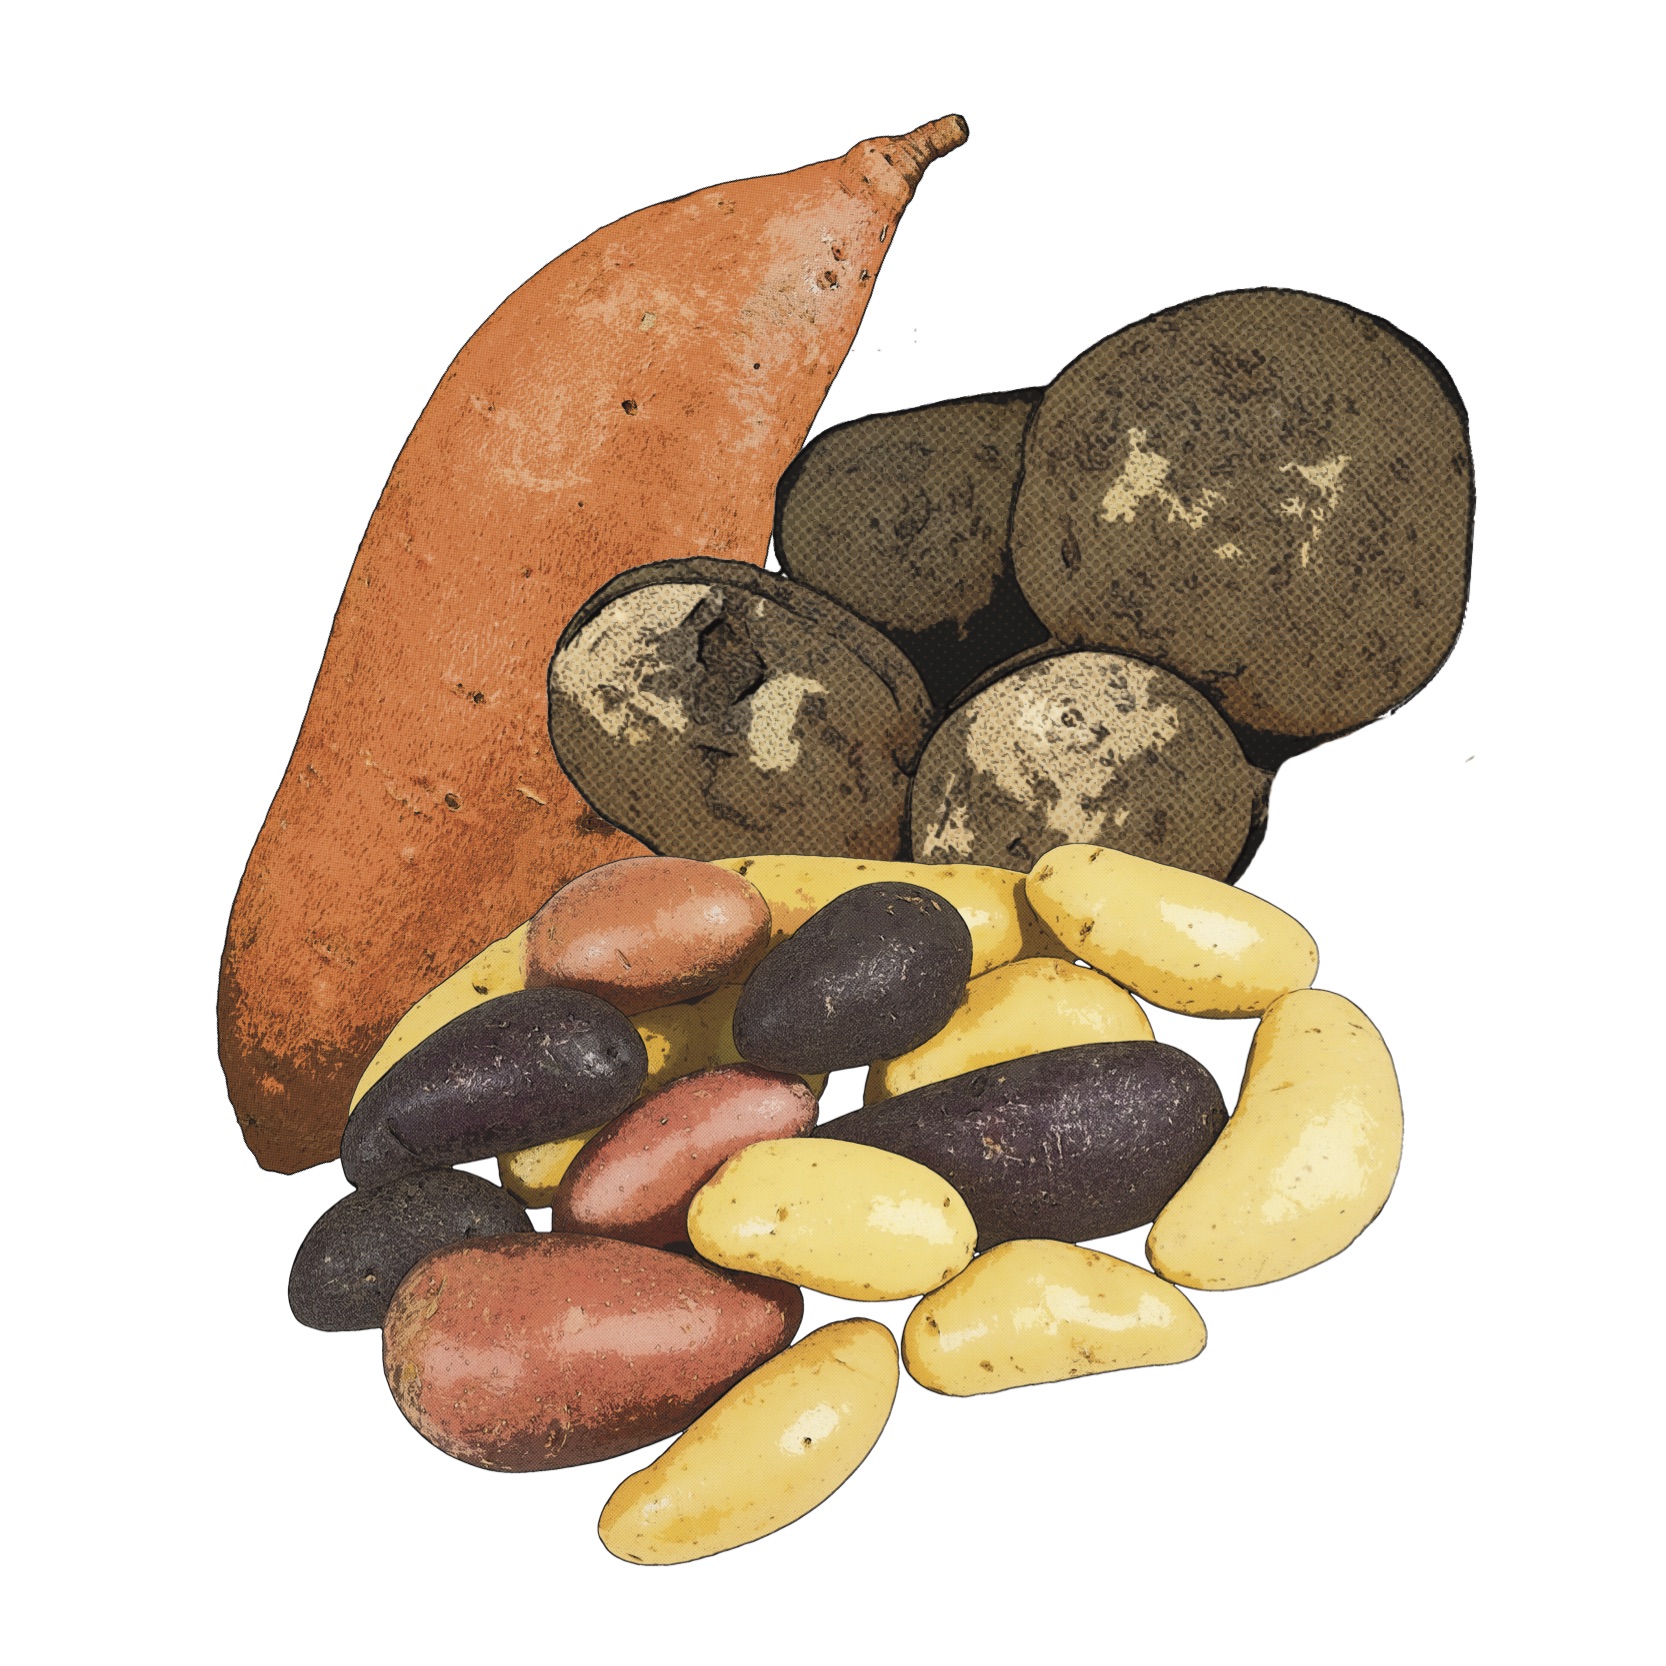 potato illustration